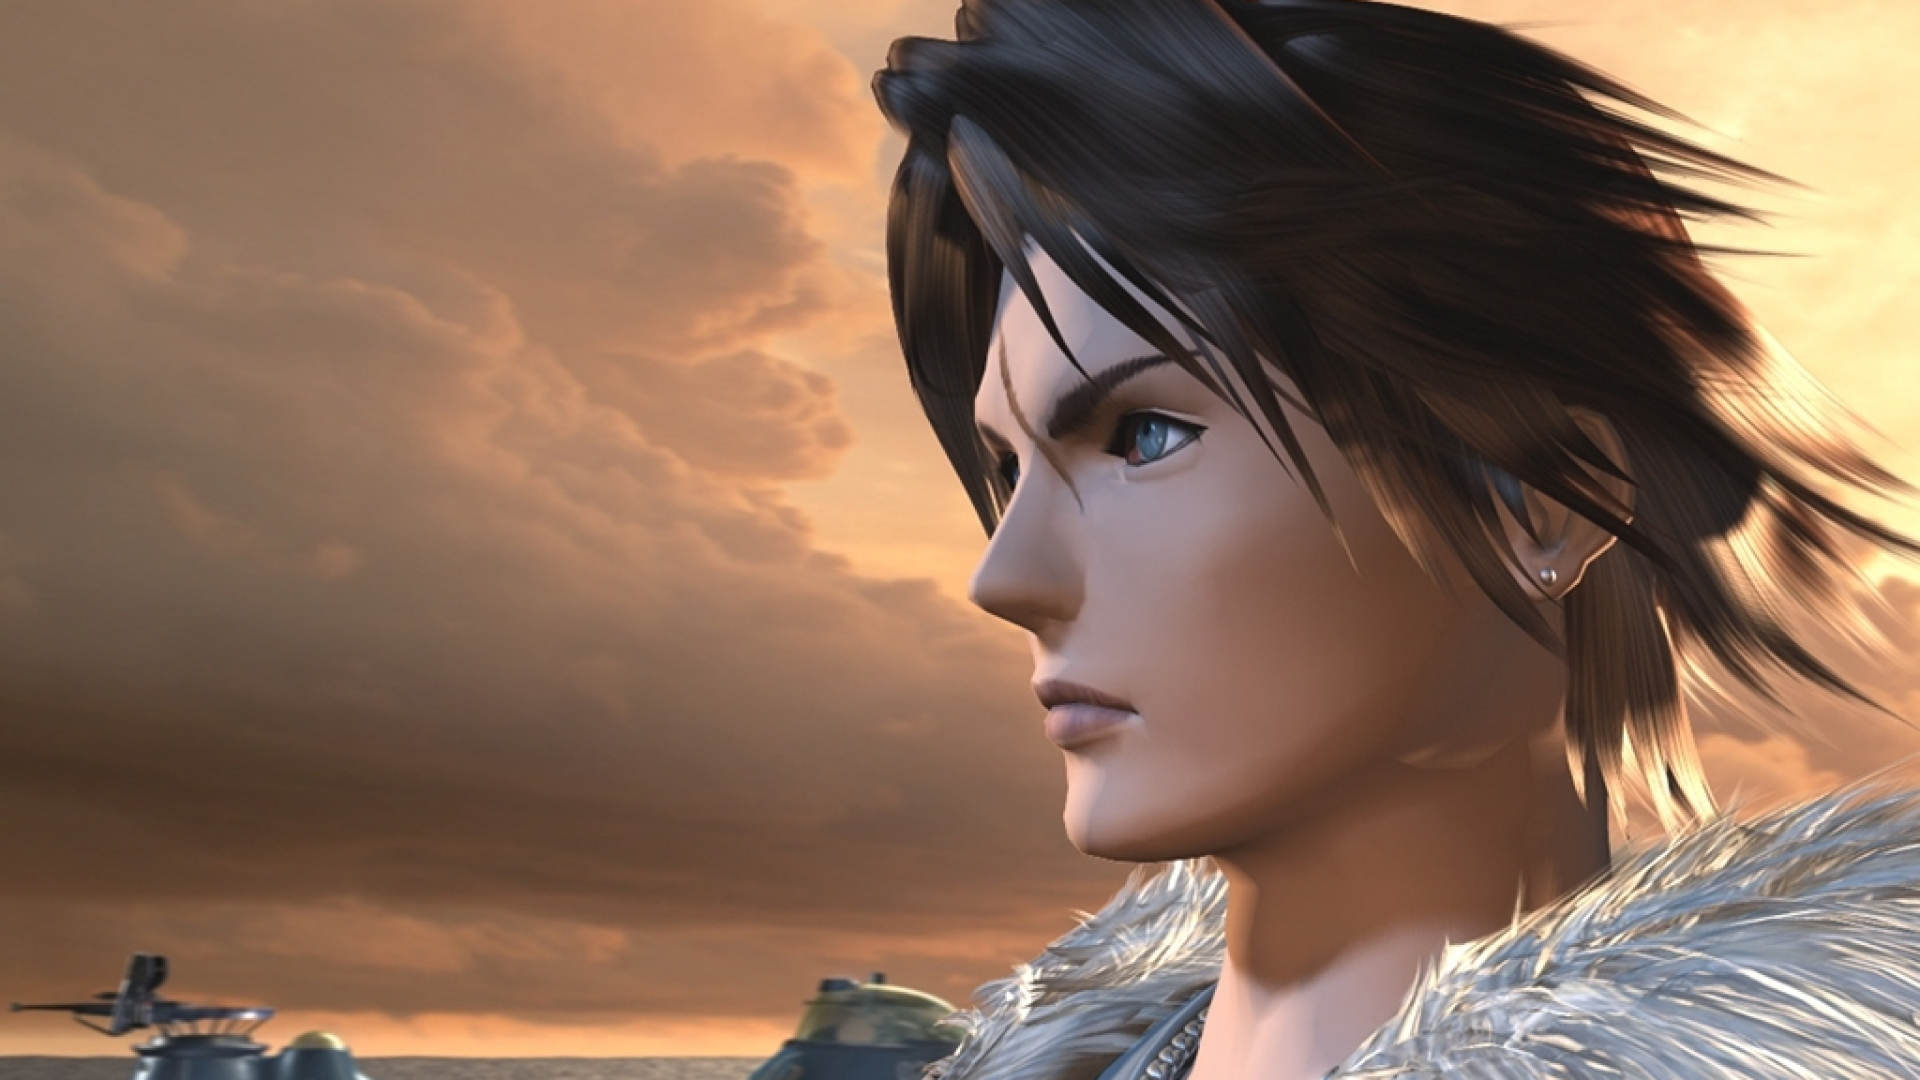 Video Game Final Fantasy VIII HD Wallpaper | Background Image